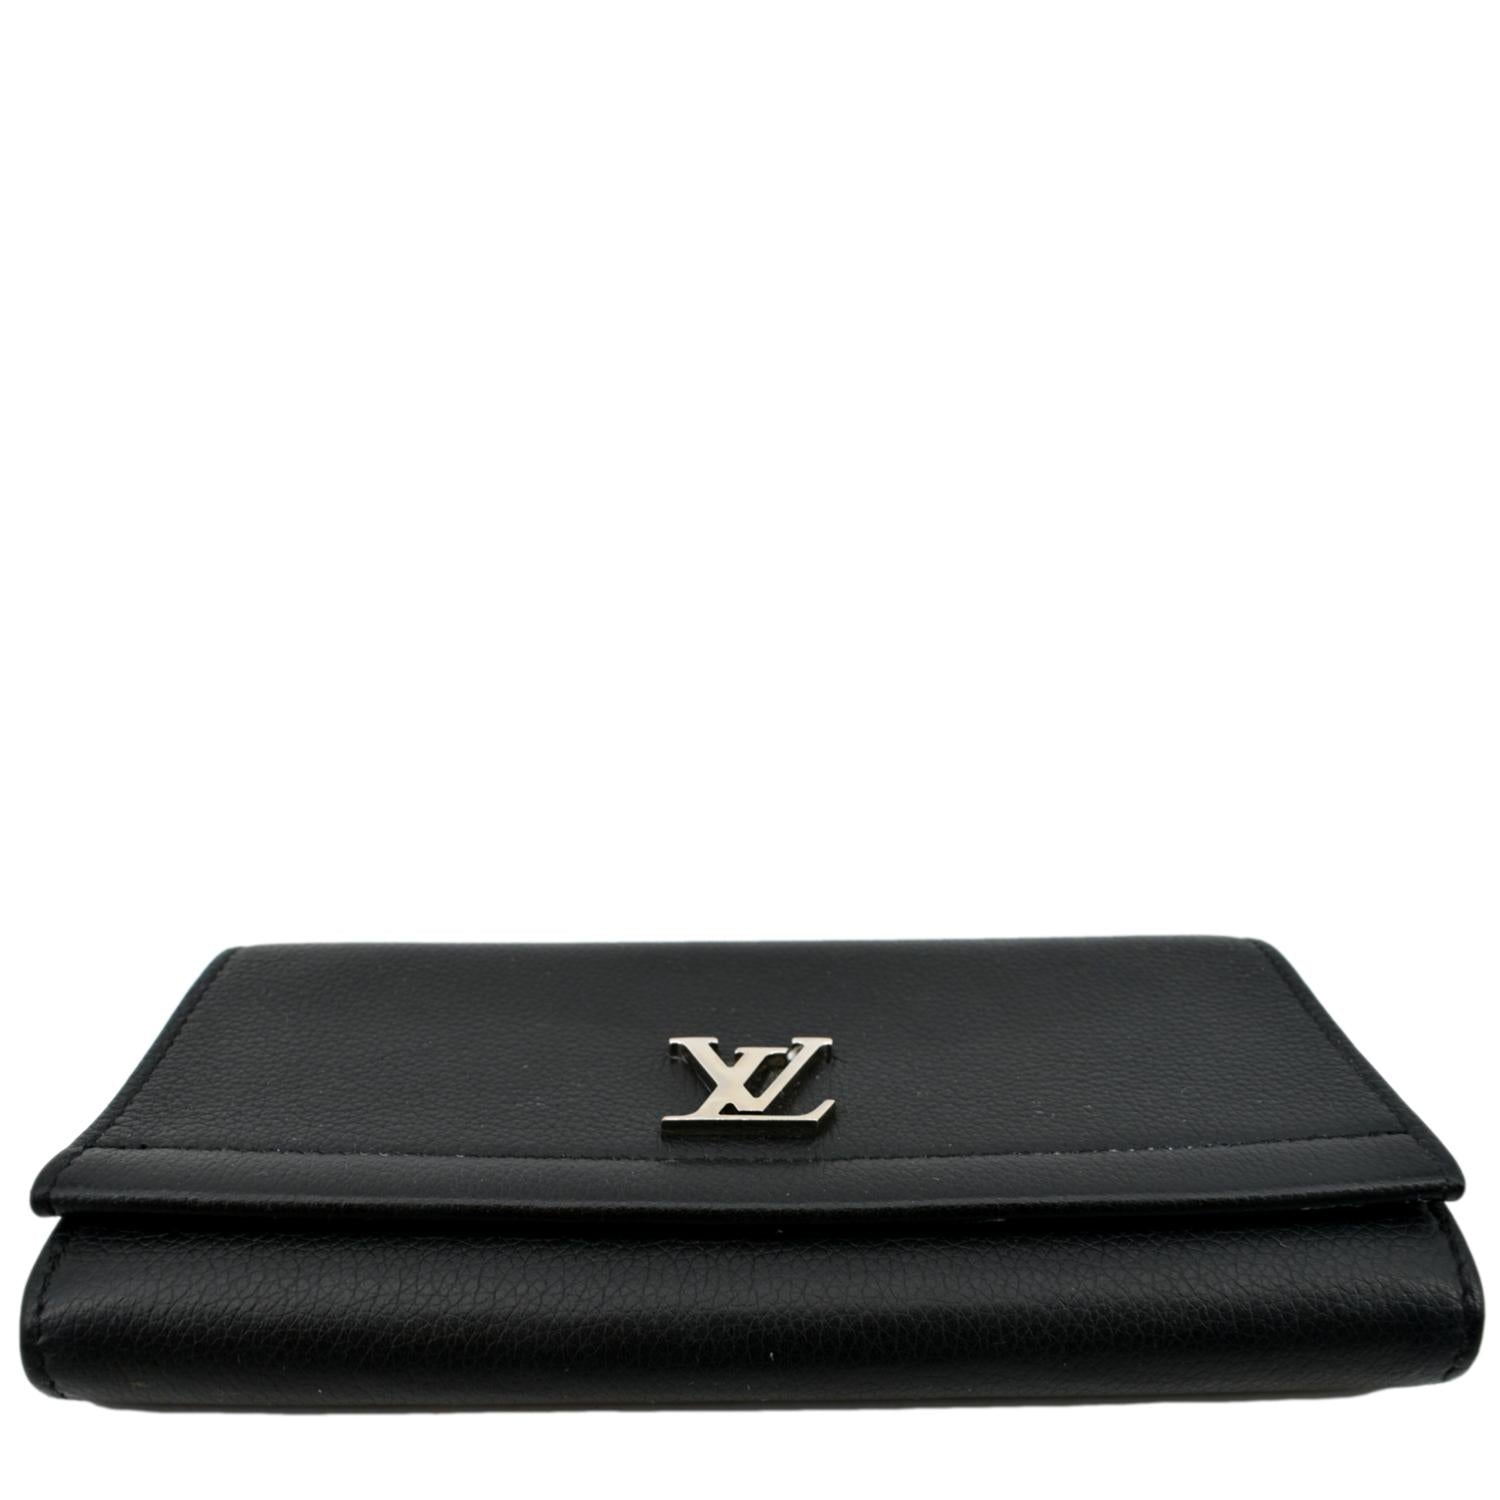 Louis Vuitton Black/Beige Calfskin Leather Lockme II Bag